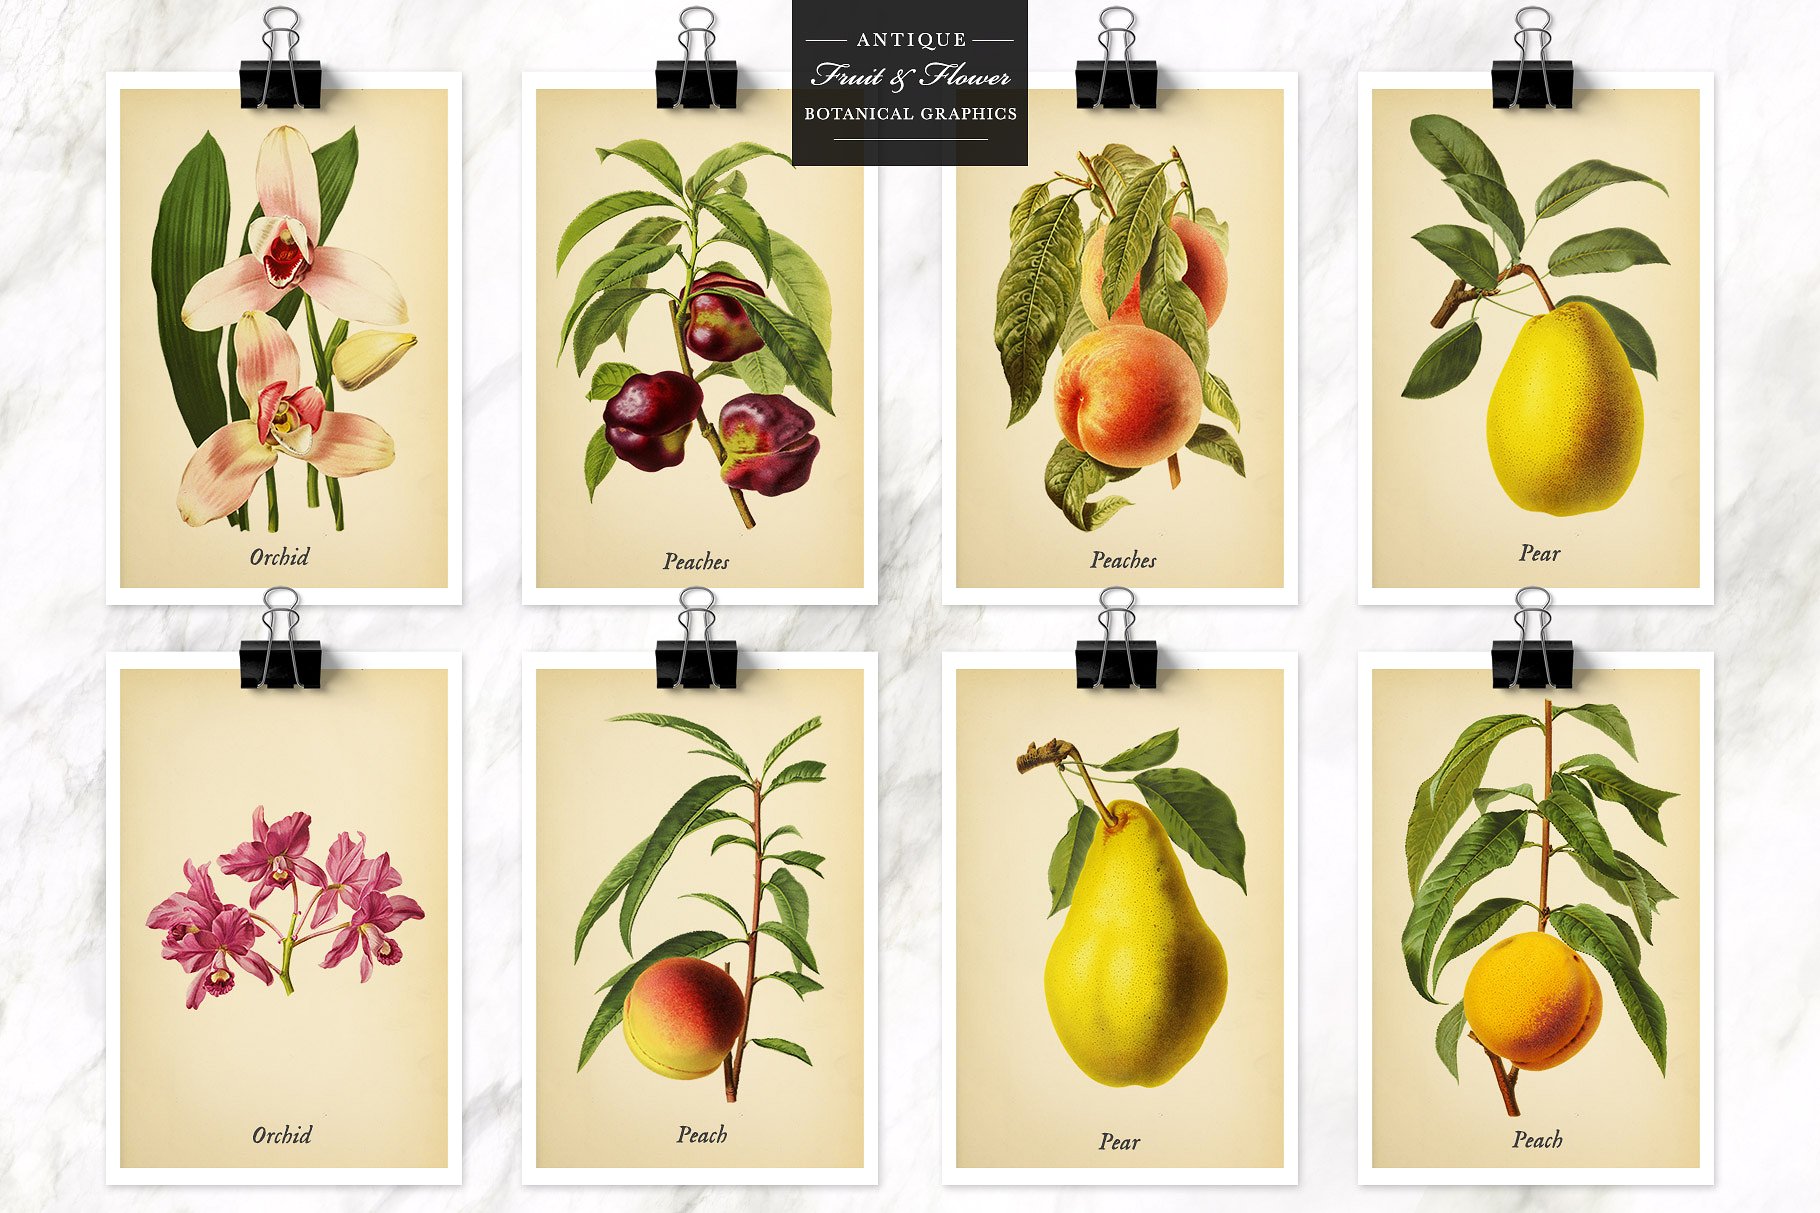 复古风格水果&花卉剪贴画素材 Antique Fruit & Flowers Graphics插图(7)